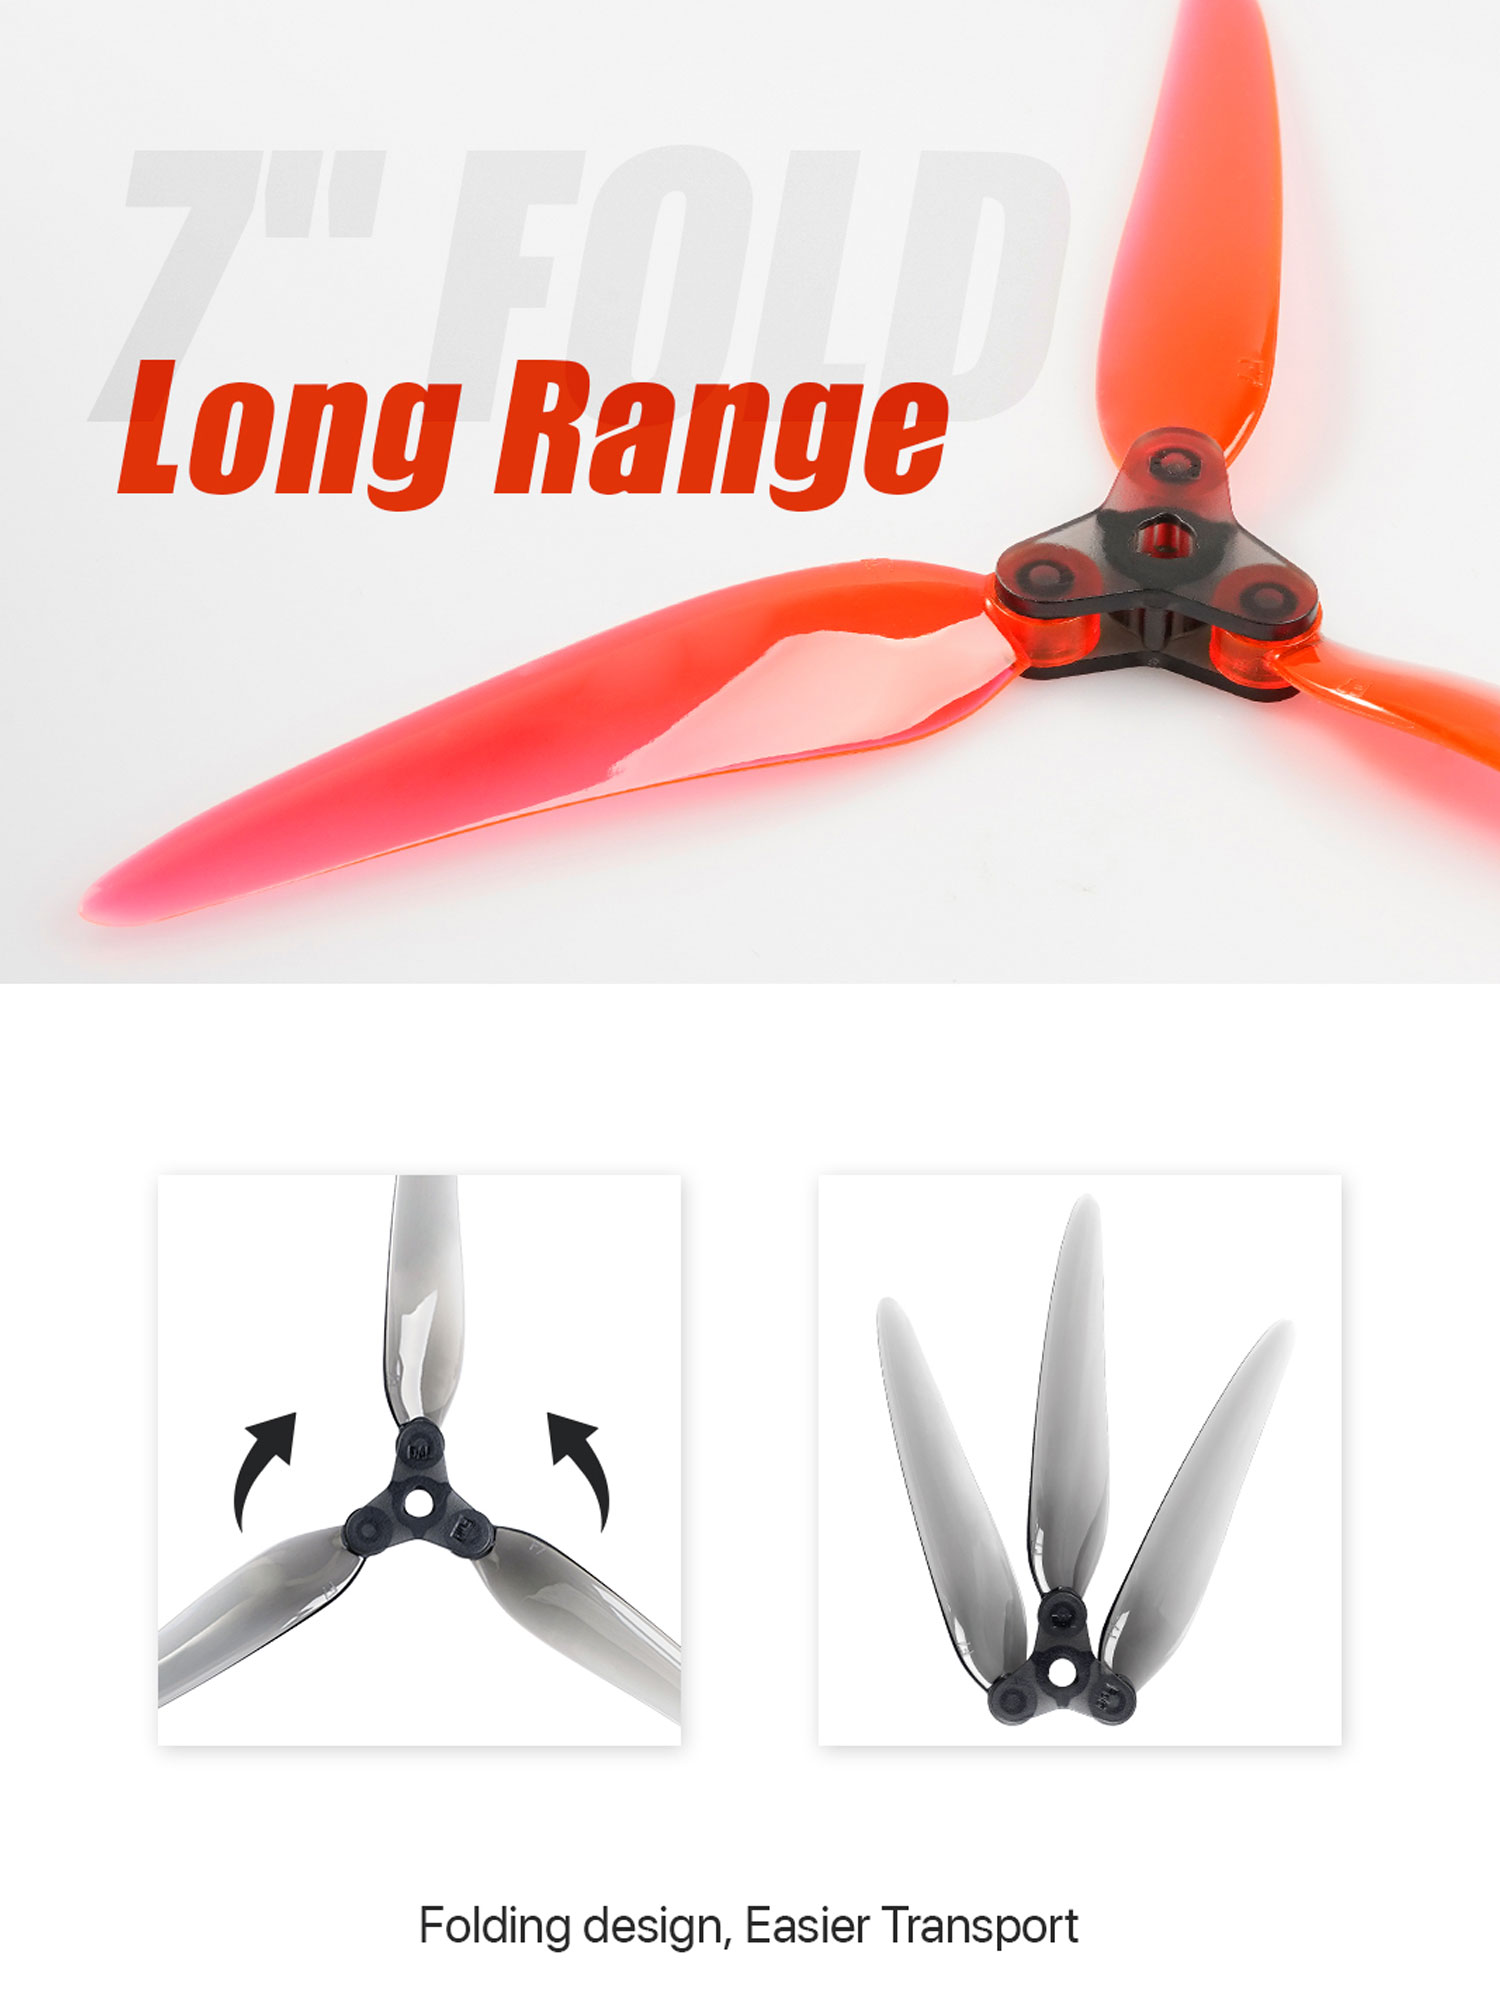 dalprop-fold-6-propeller-long-range-drone.jpg